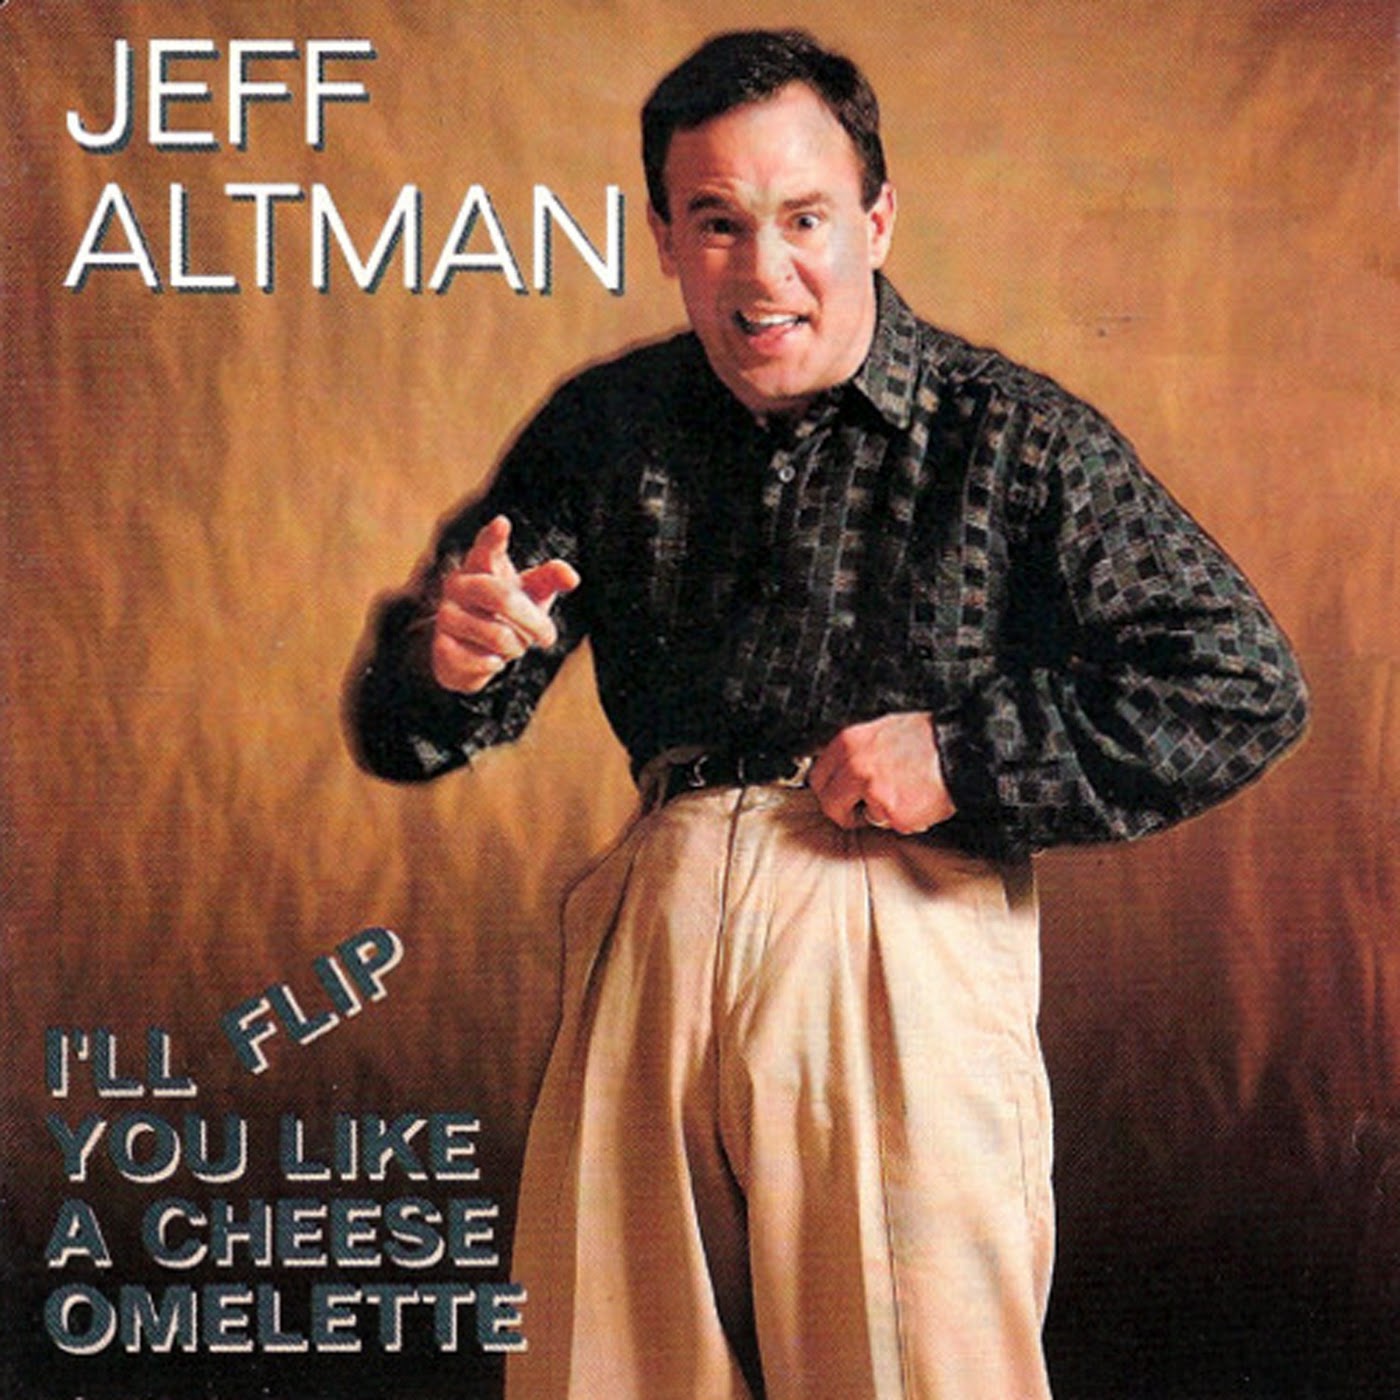 Jeff+Altman+-+I%27ll+Flip+You+Like+A+Cheese+Omelet.jpg